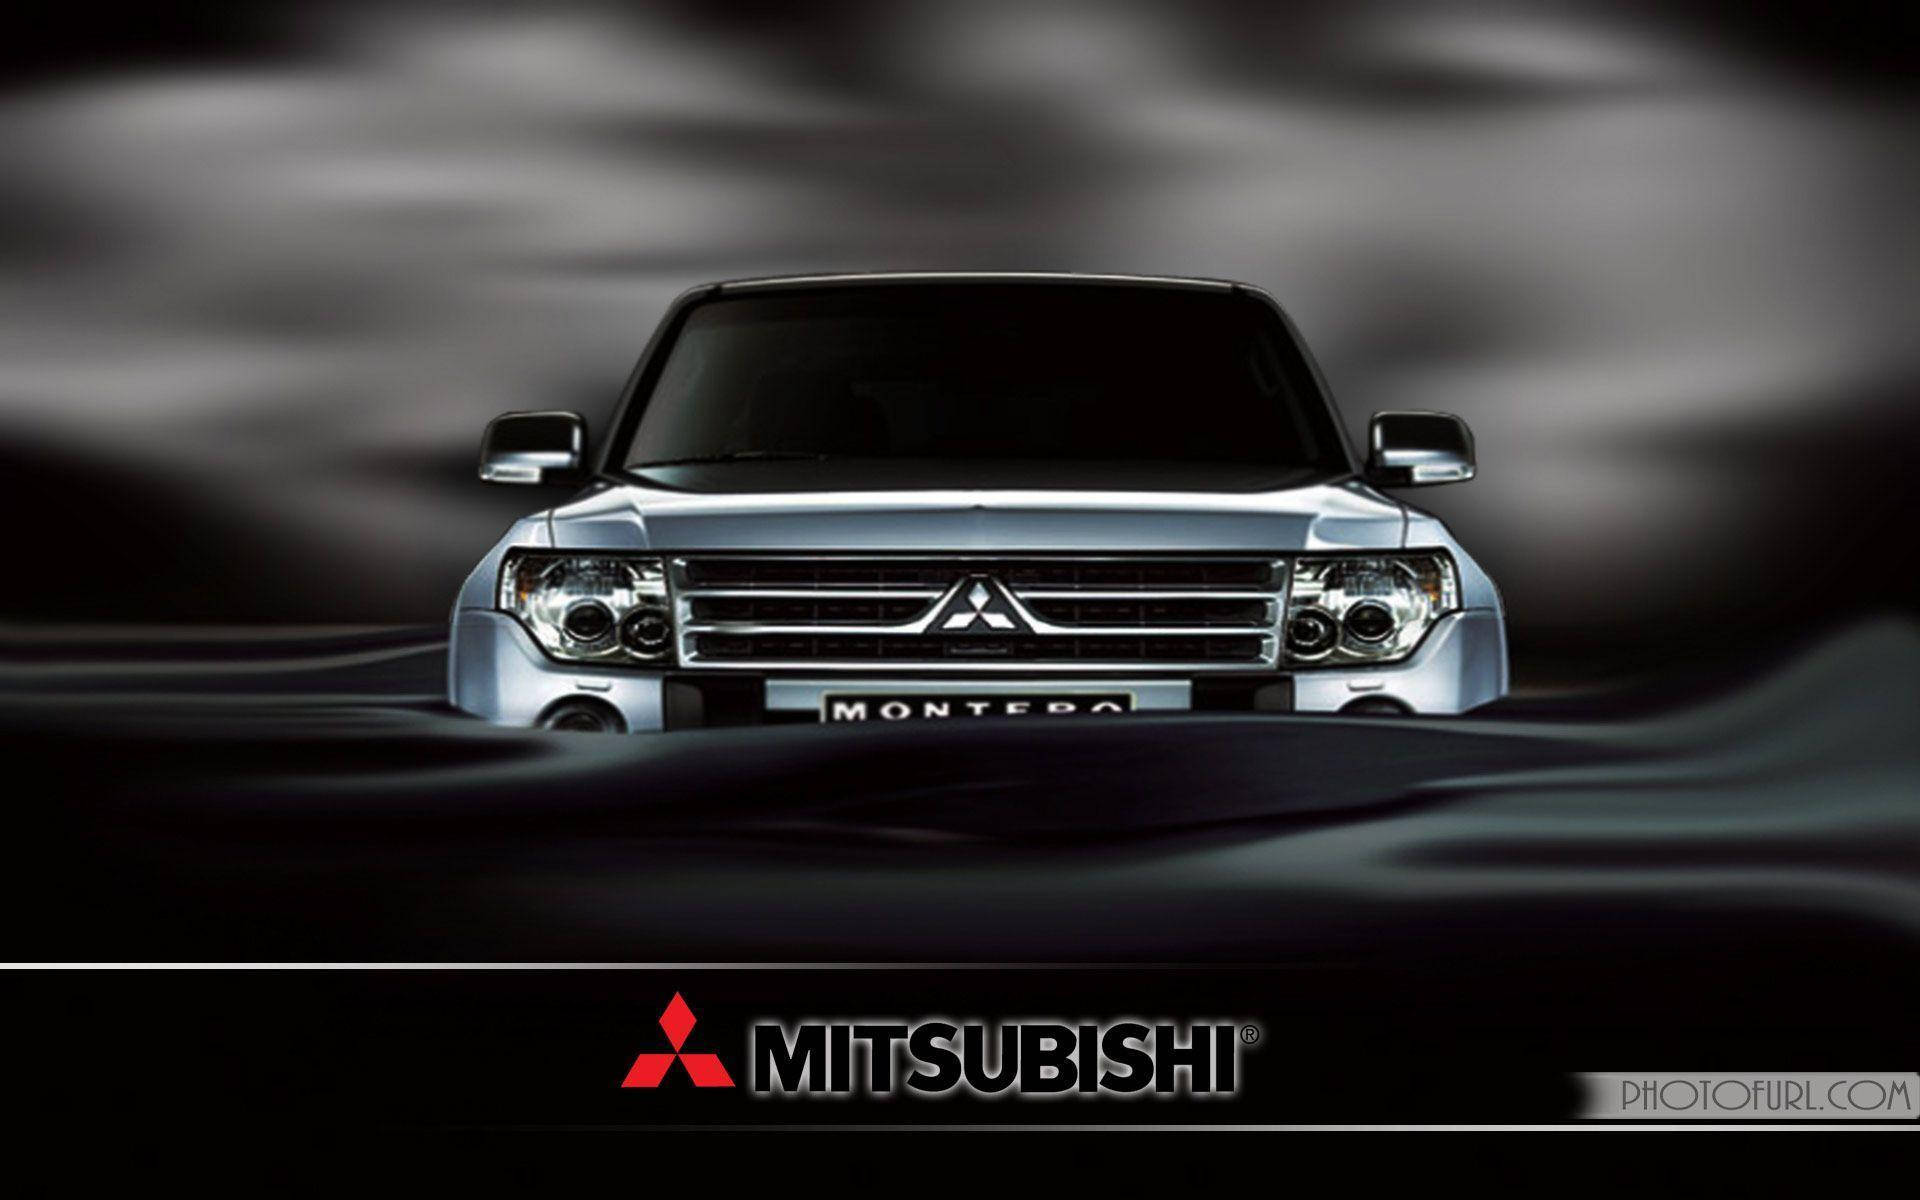 Front View of Mitsubishi Montero Wallpaper